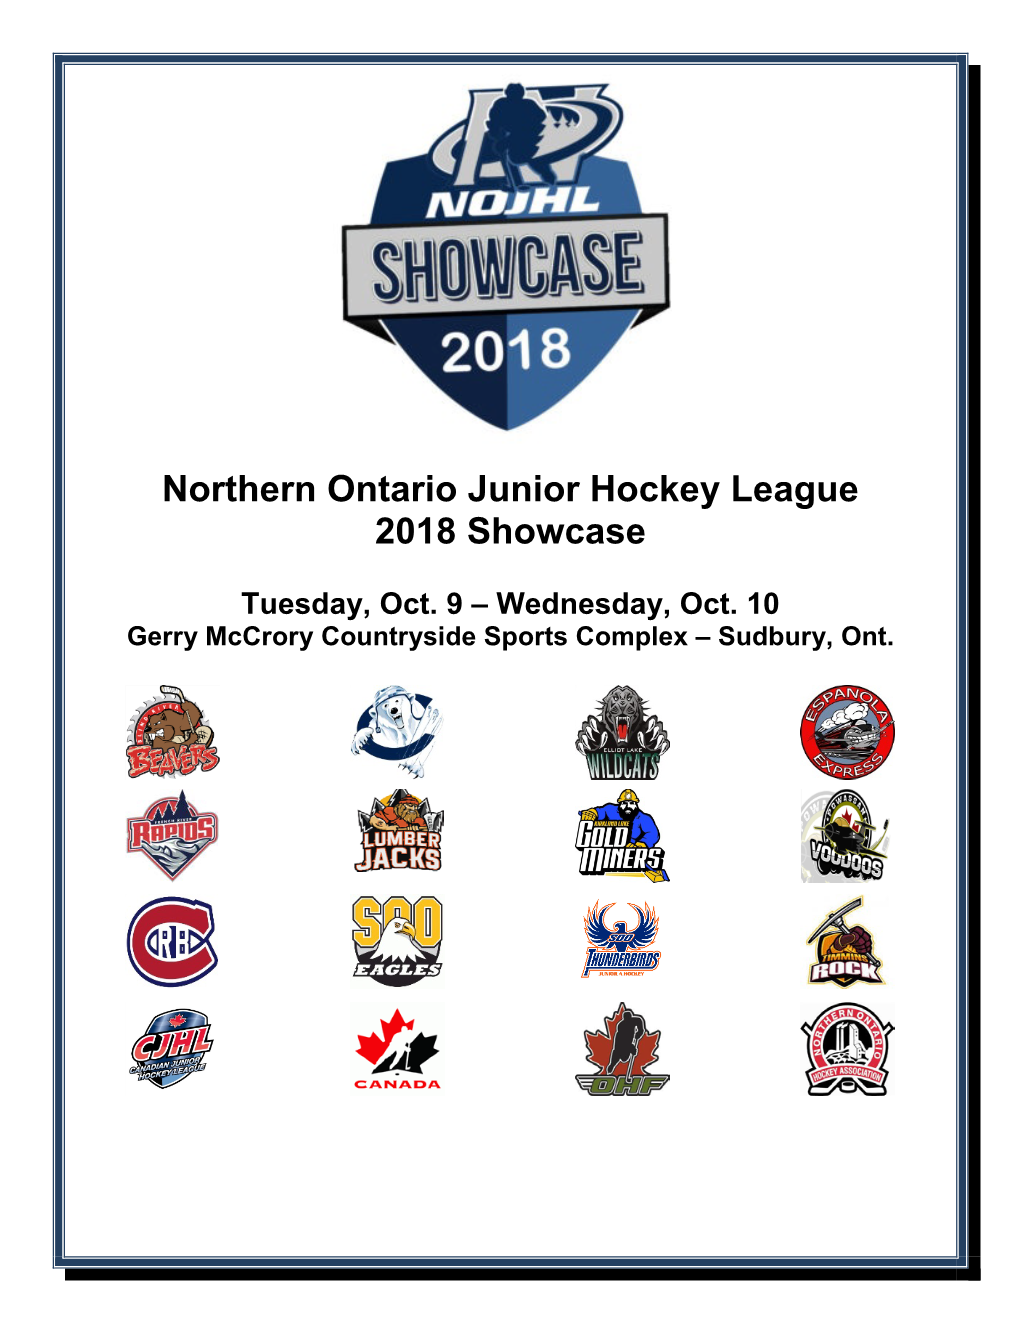 Northern Ontario Junior Hockey League 2018 Showcase